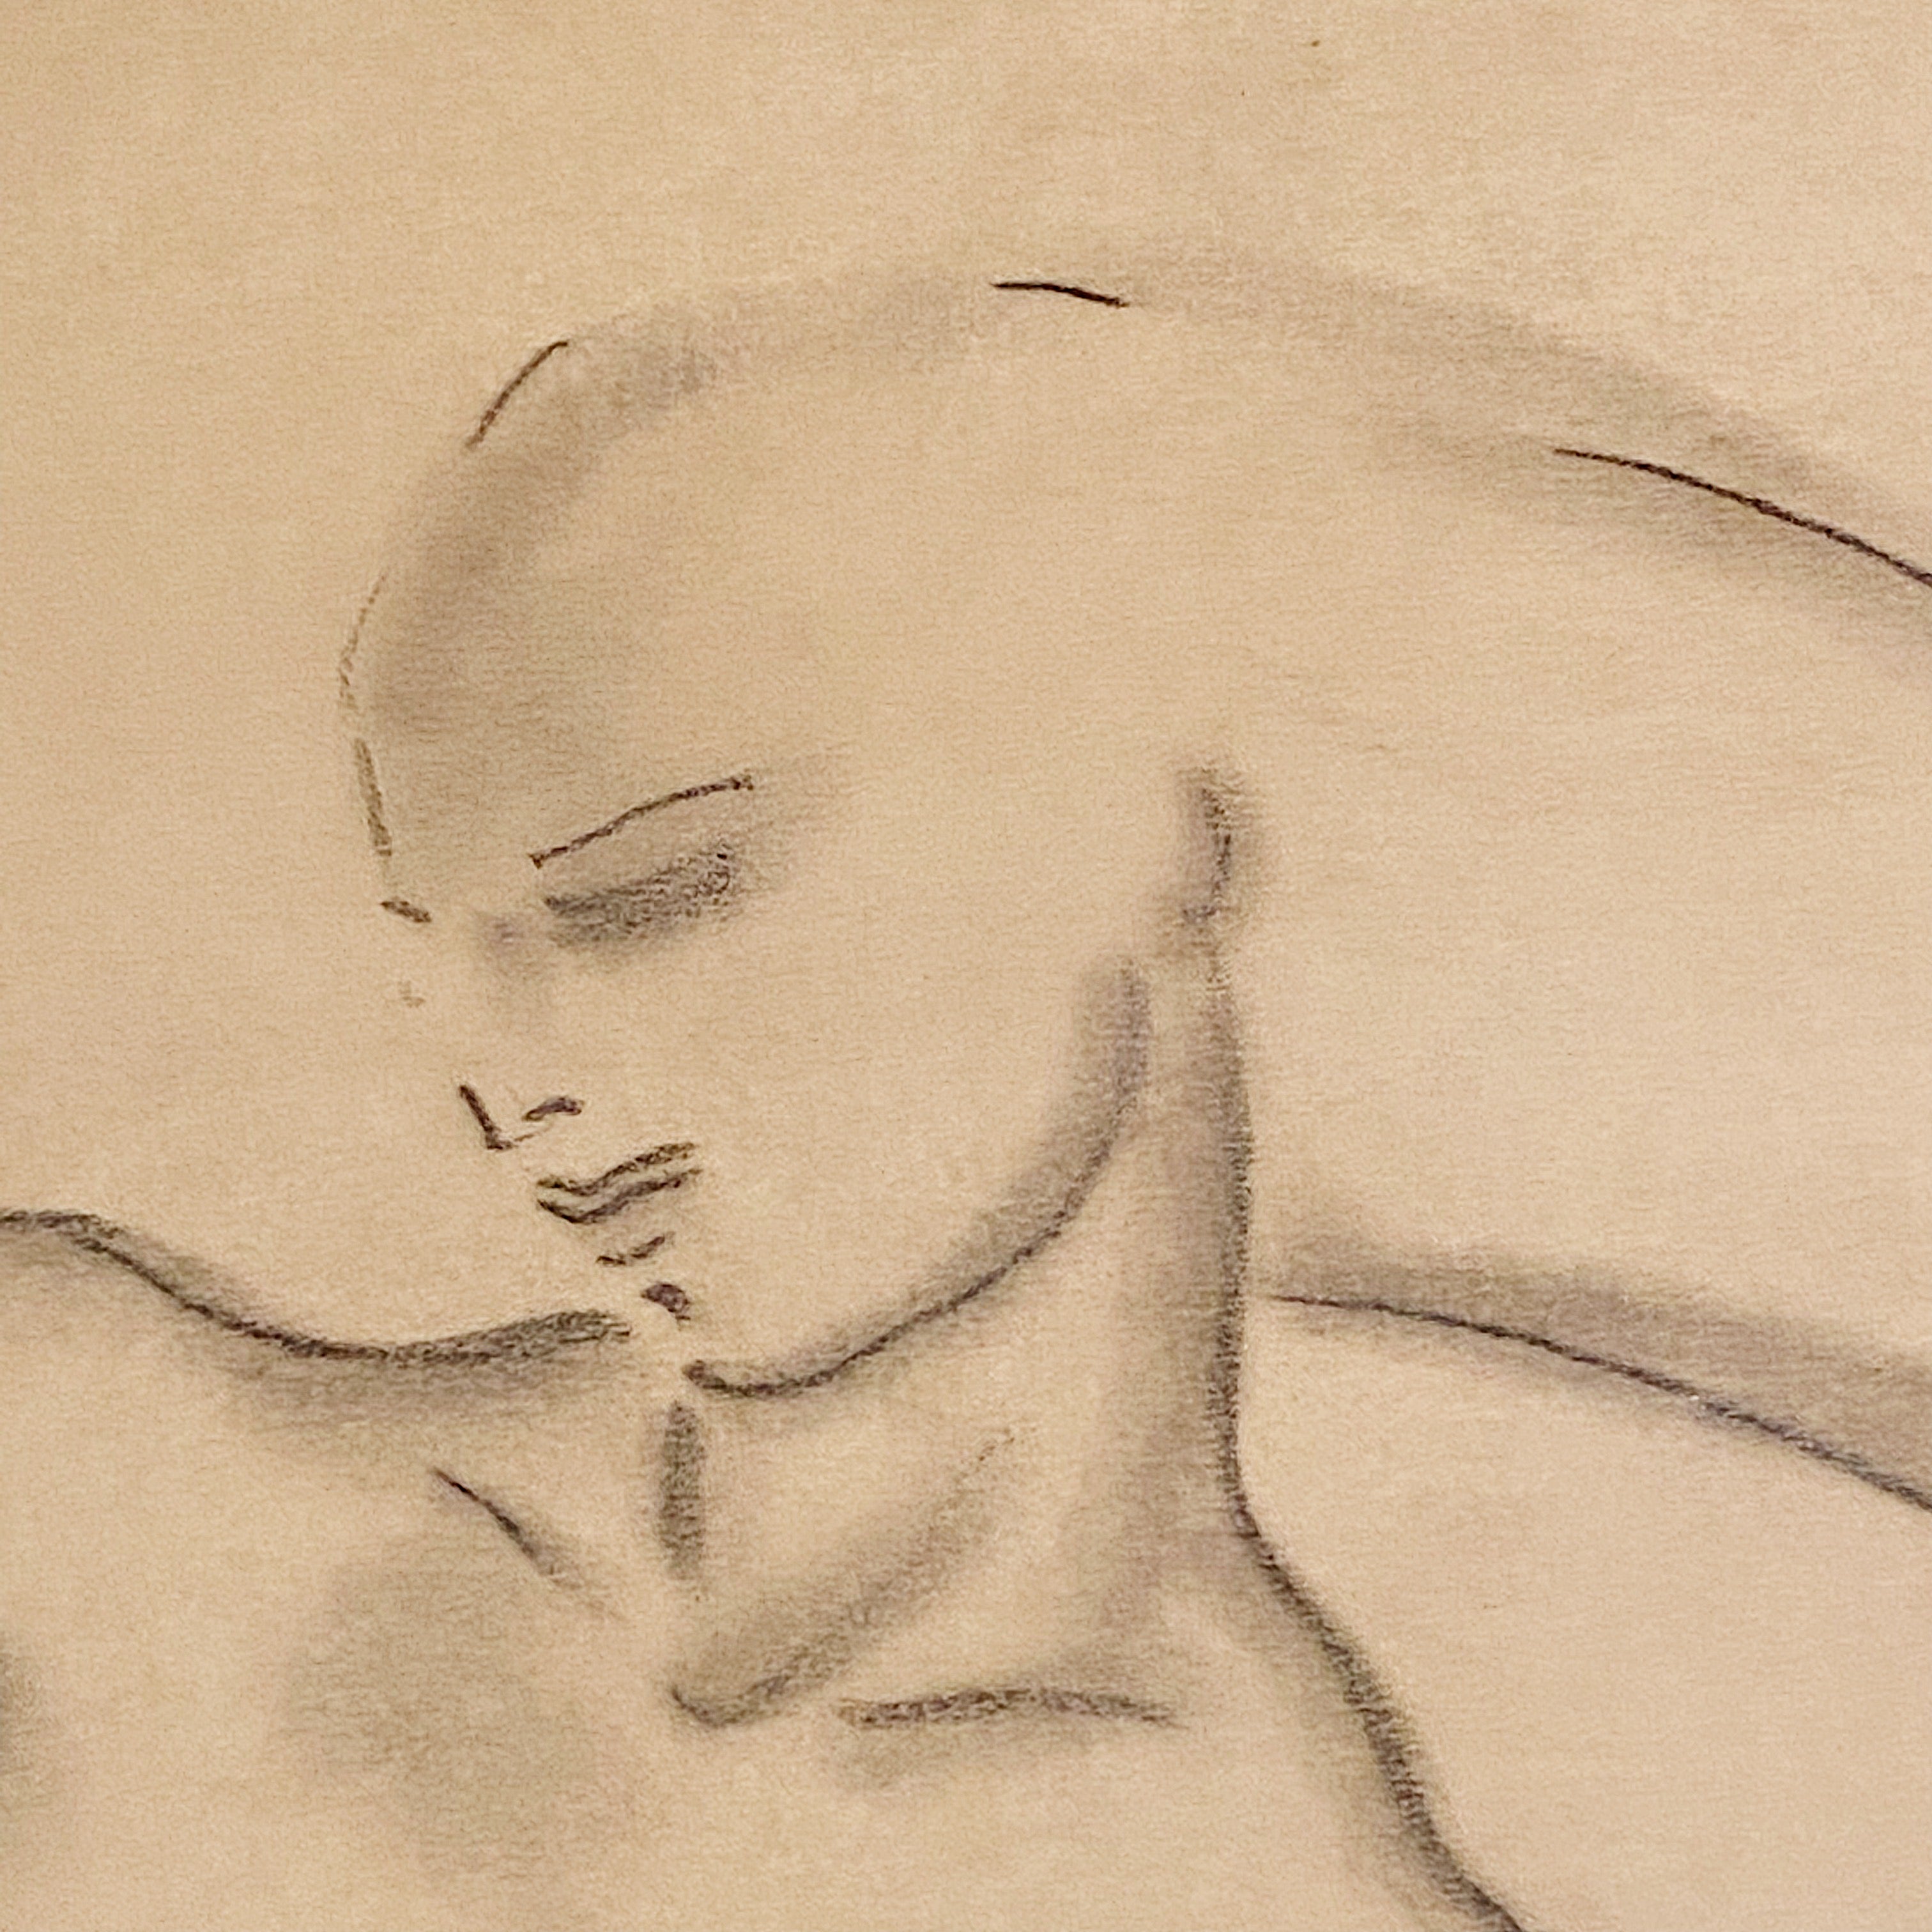 WPA Era Nude Drawing of Modernist Woman | Rare 1940s